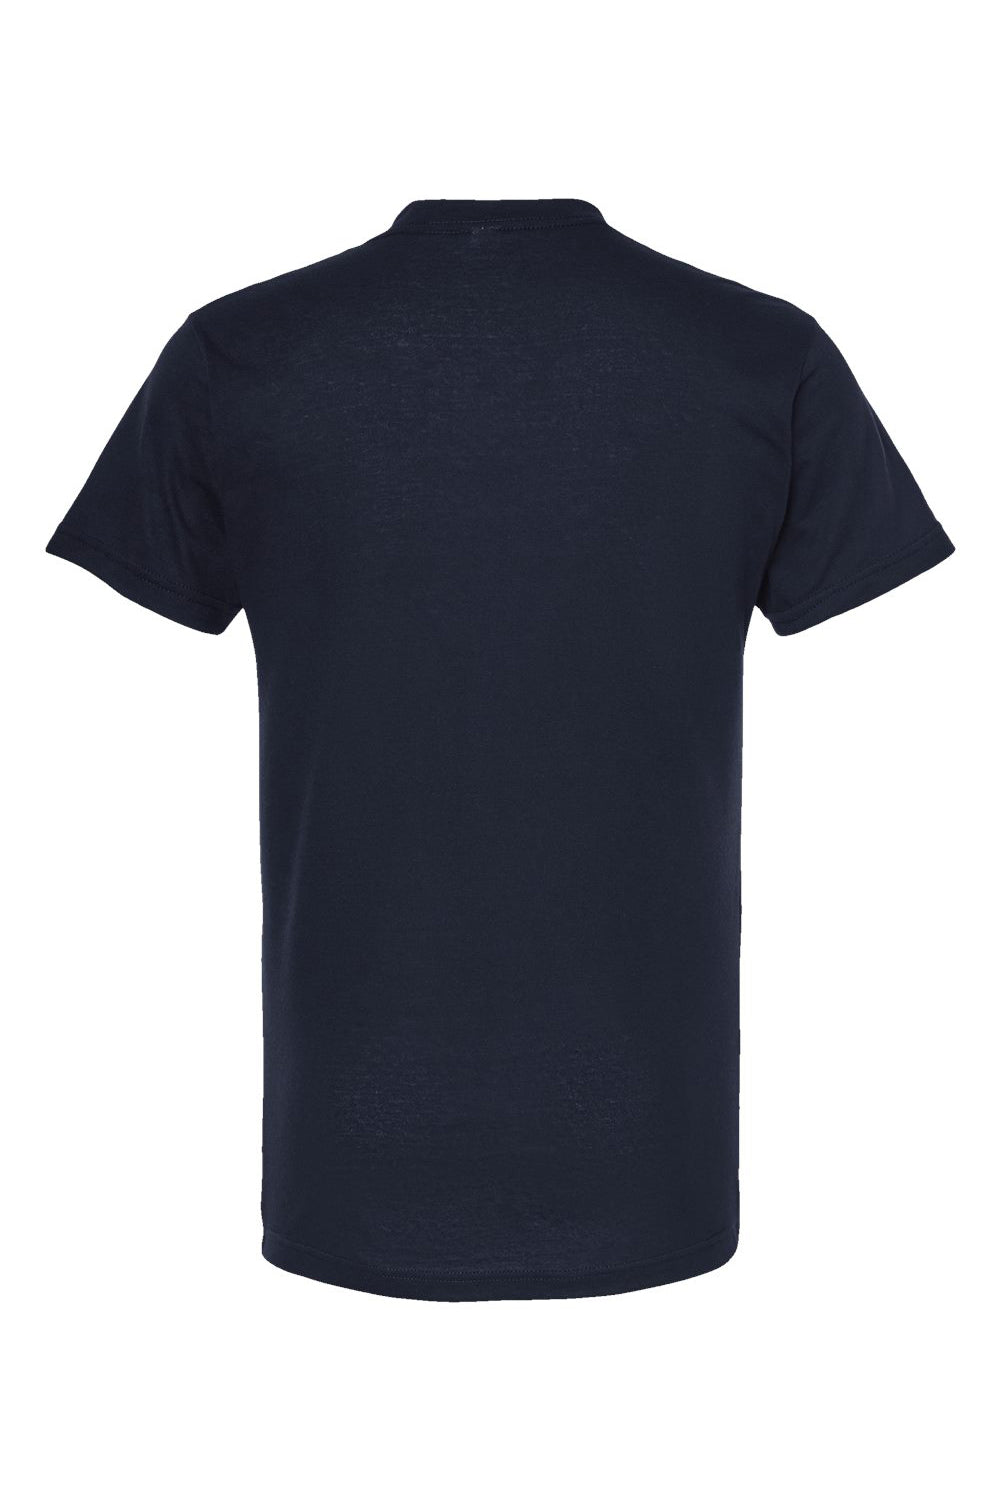 Tultex 207 Mens Poly-Rich Short Sleeve V-Neck T-Shirt Navy Blue Flat Back